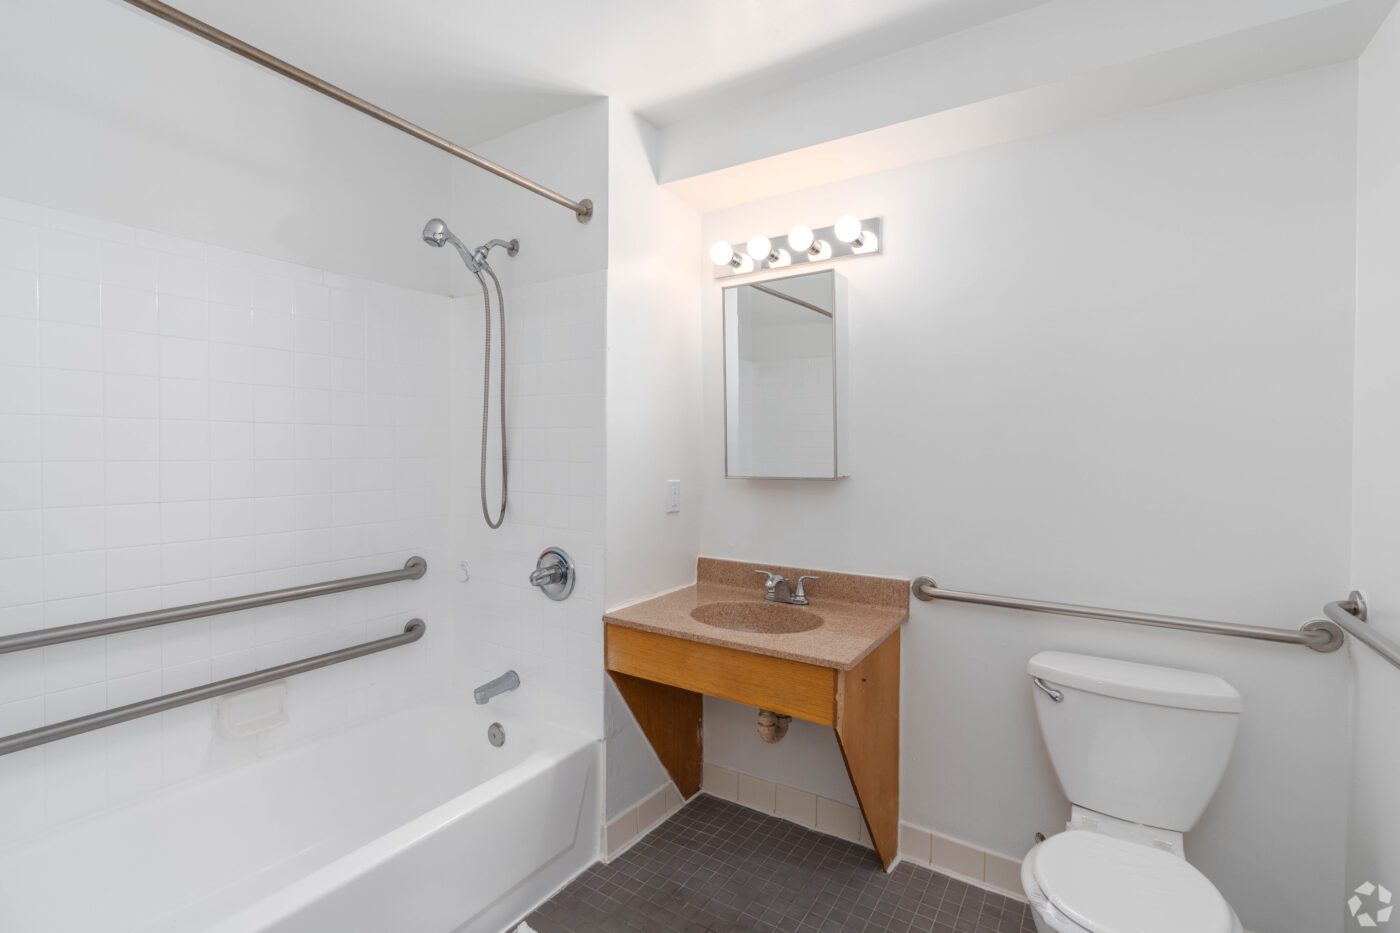 Apartment-Interior-Bathroom-Vanity-2-scaled